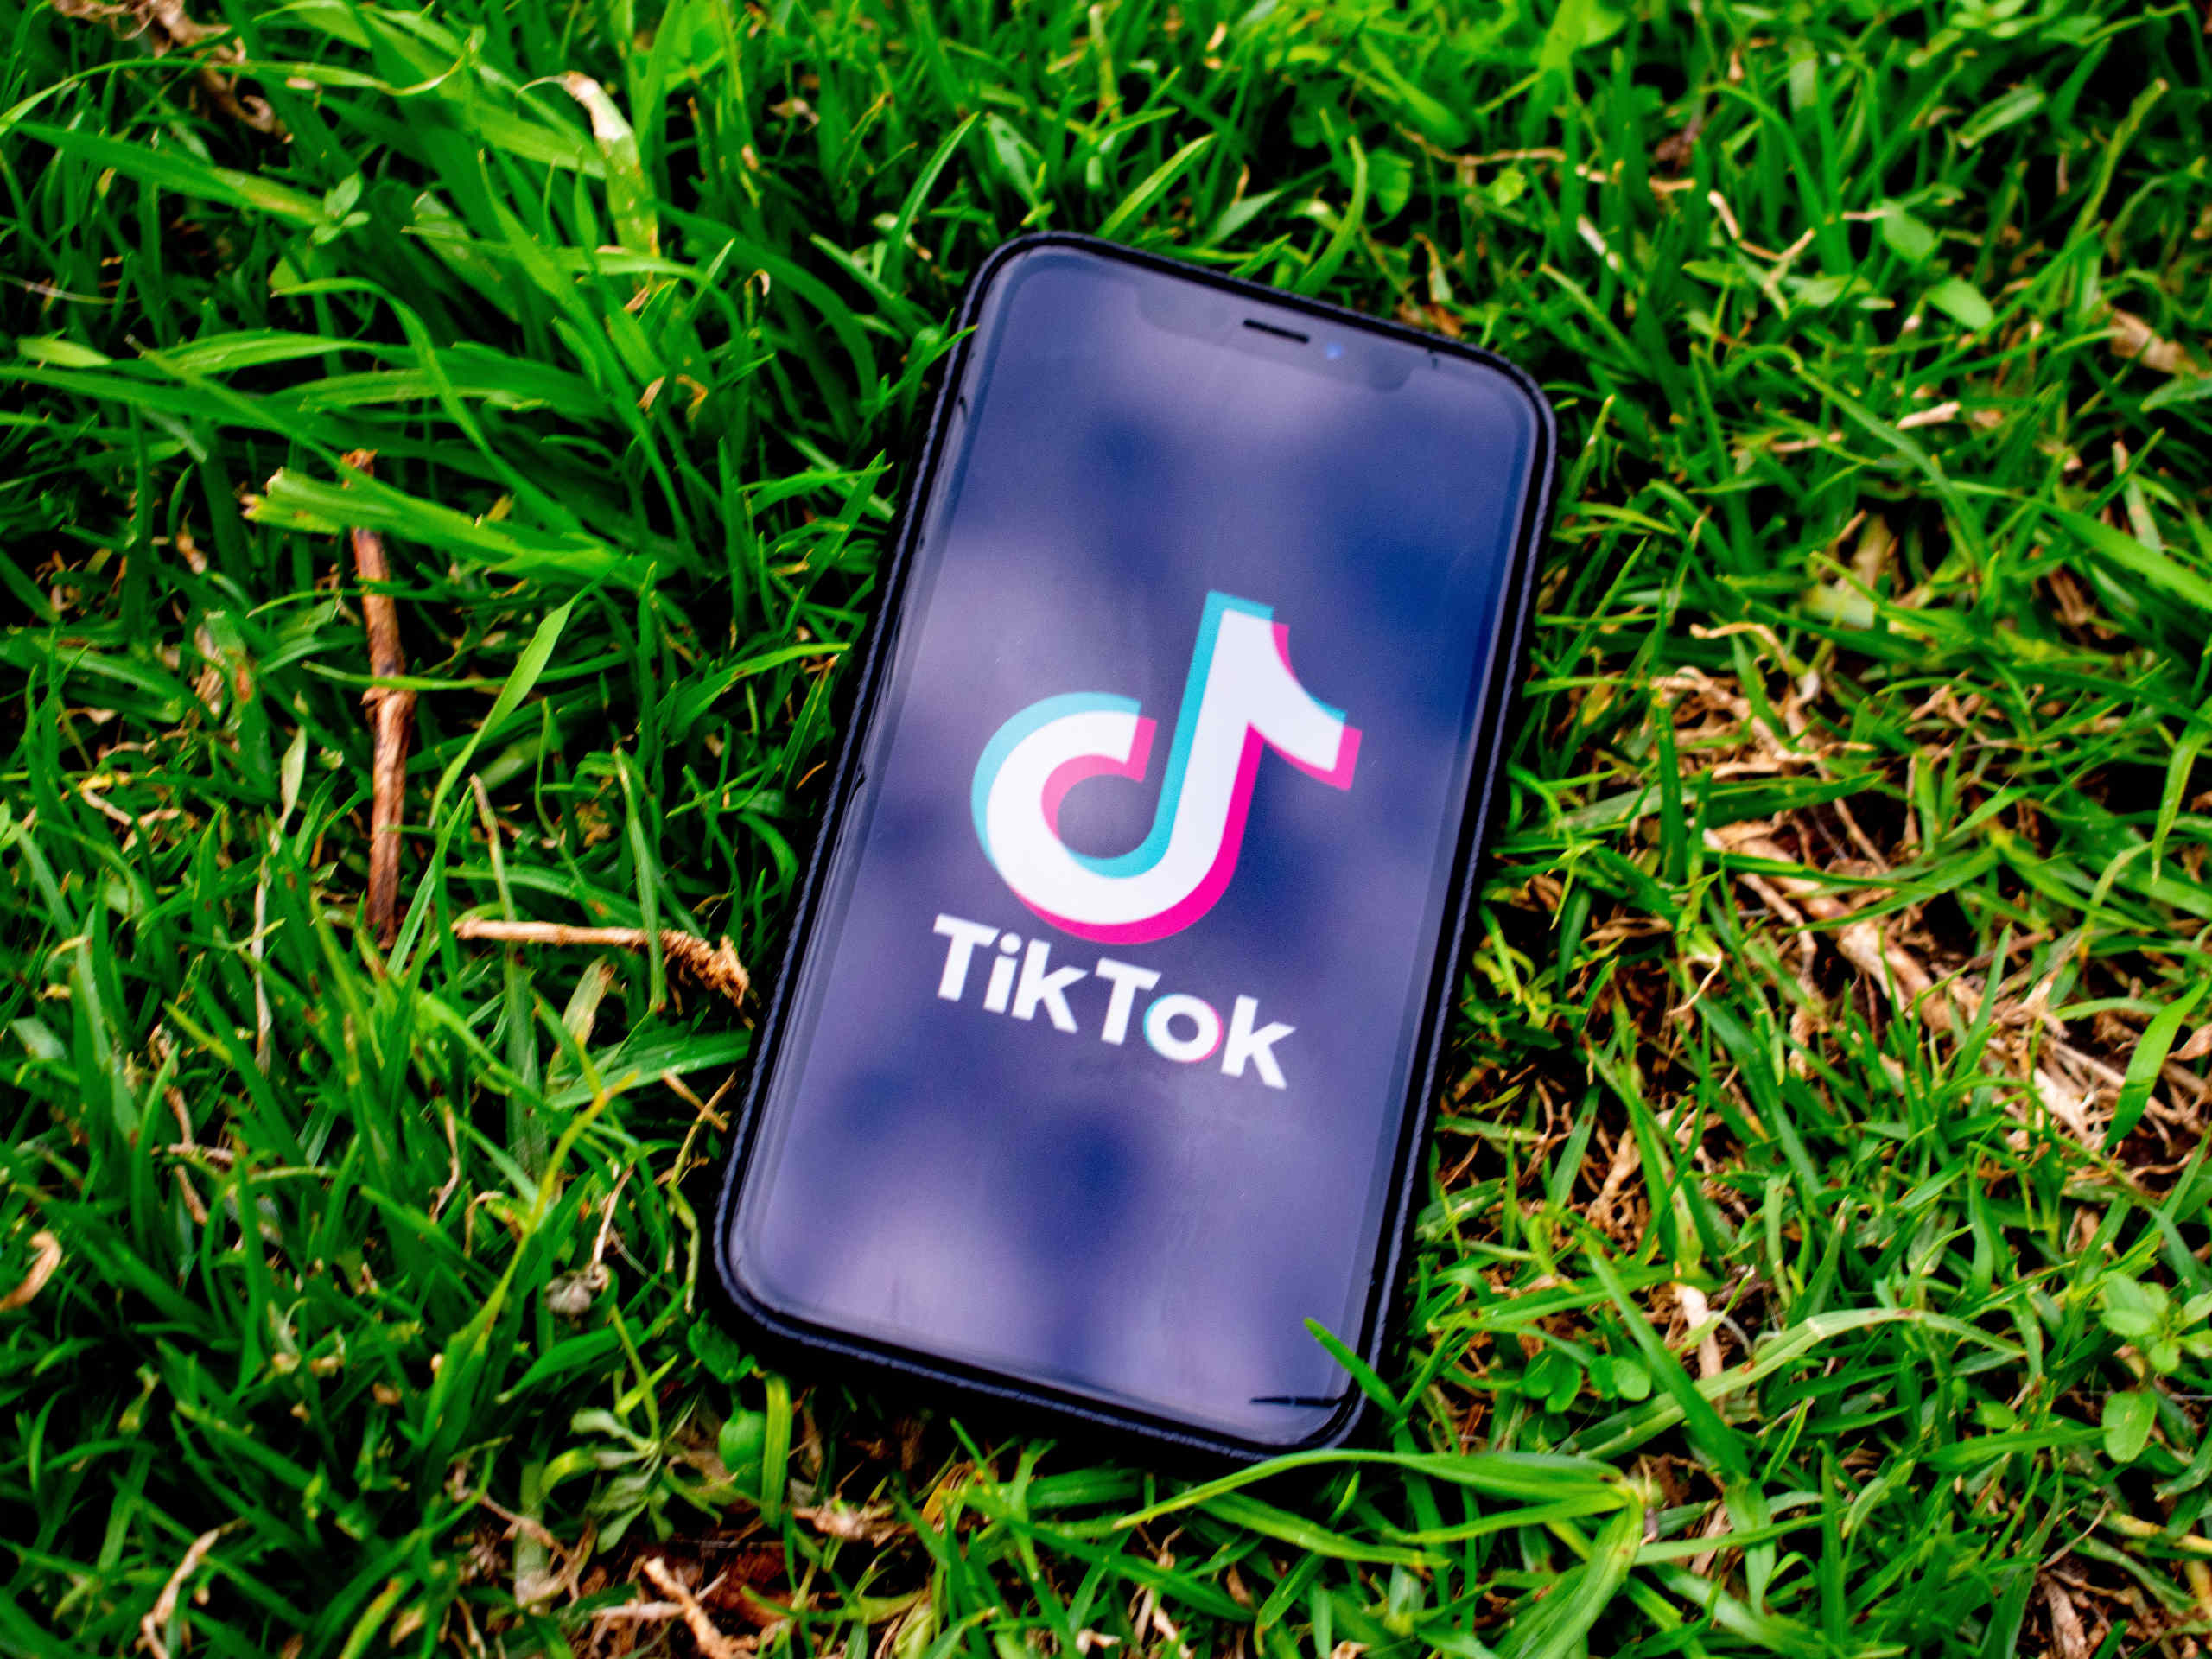 TikTok als Marketing-Tool Foto beigestellt